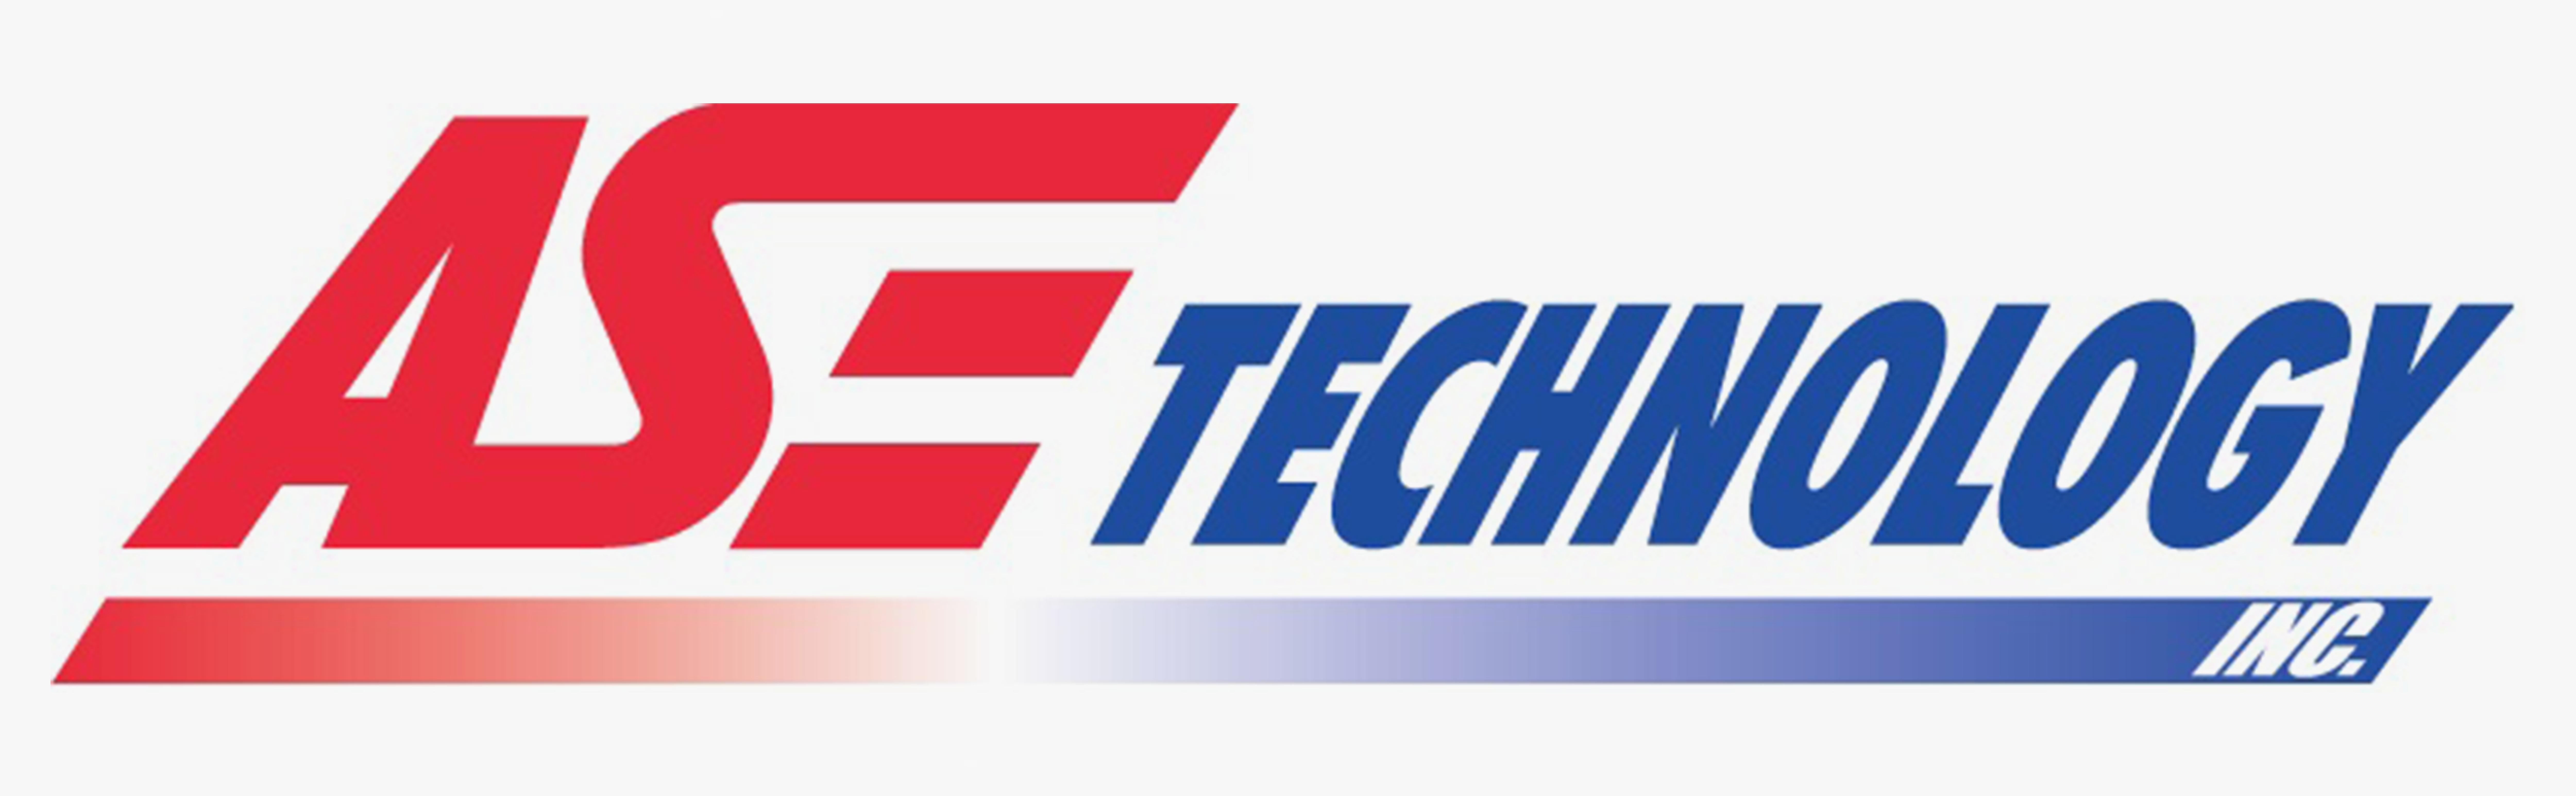 ASE Technology, Inc